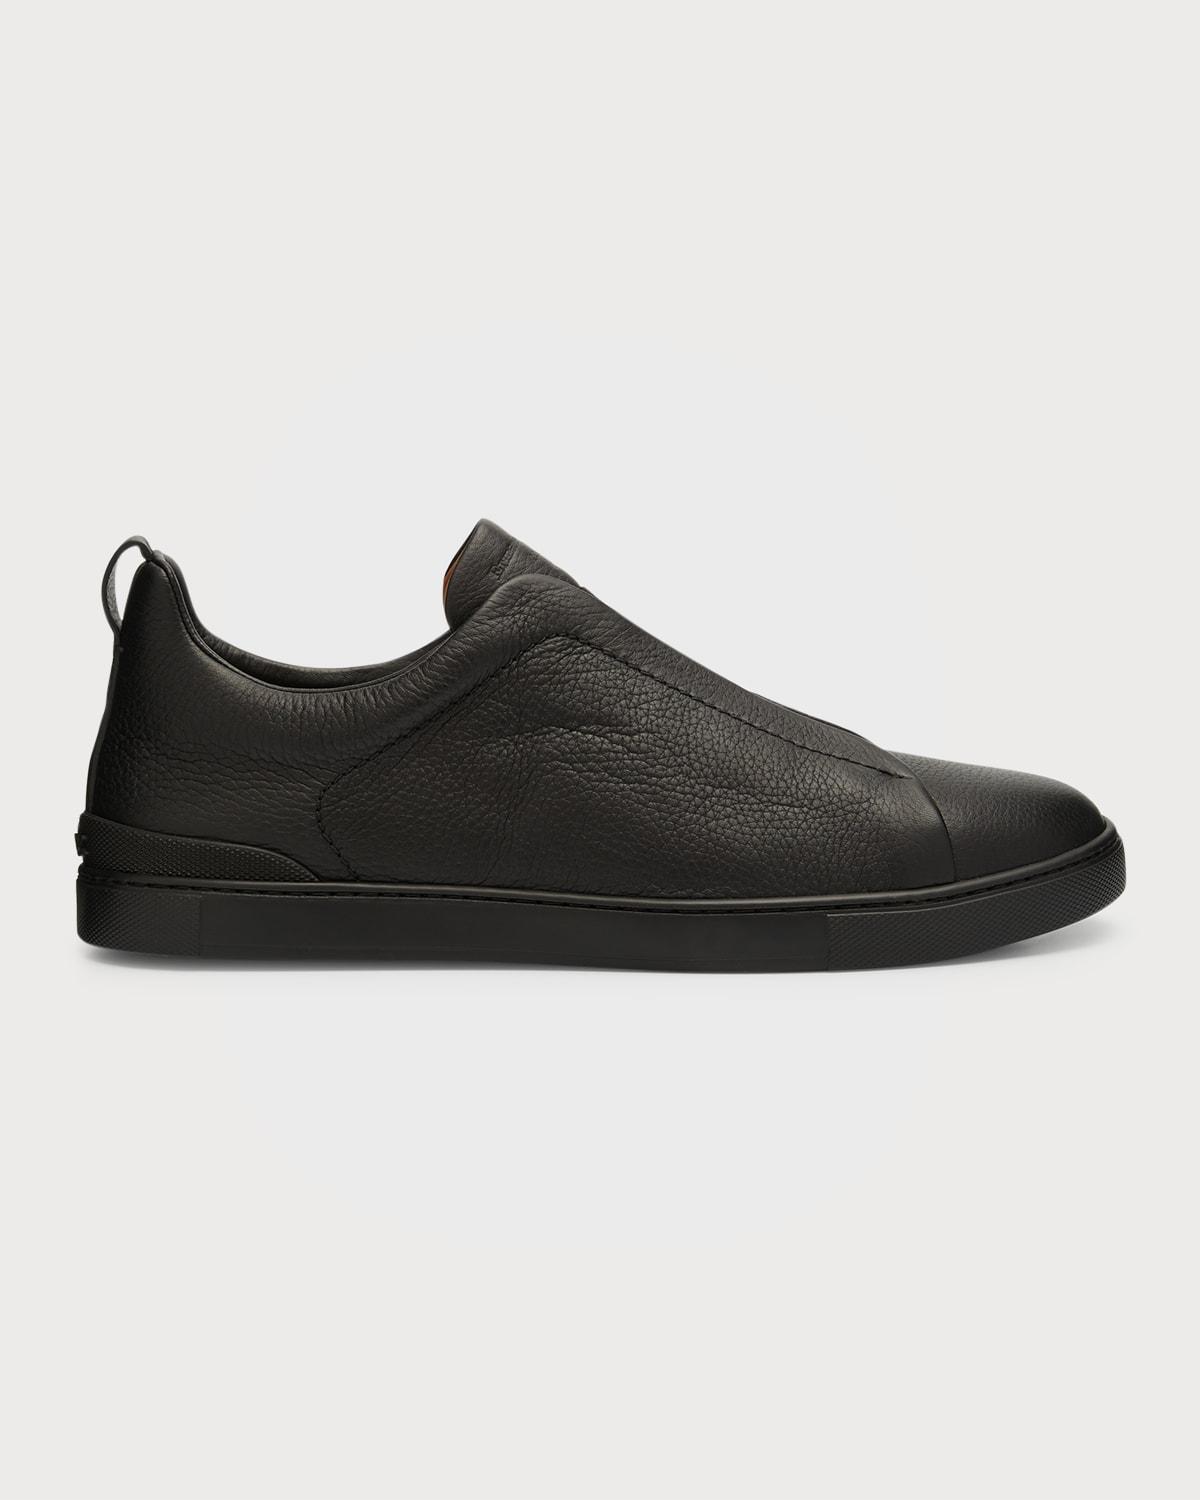 ZEGNA Triple Stitch Deerskin Leather Slip-On Sneaker Product Image